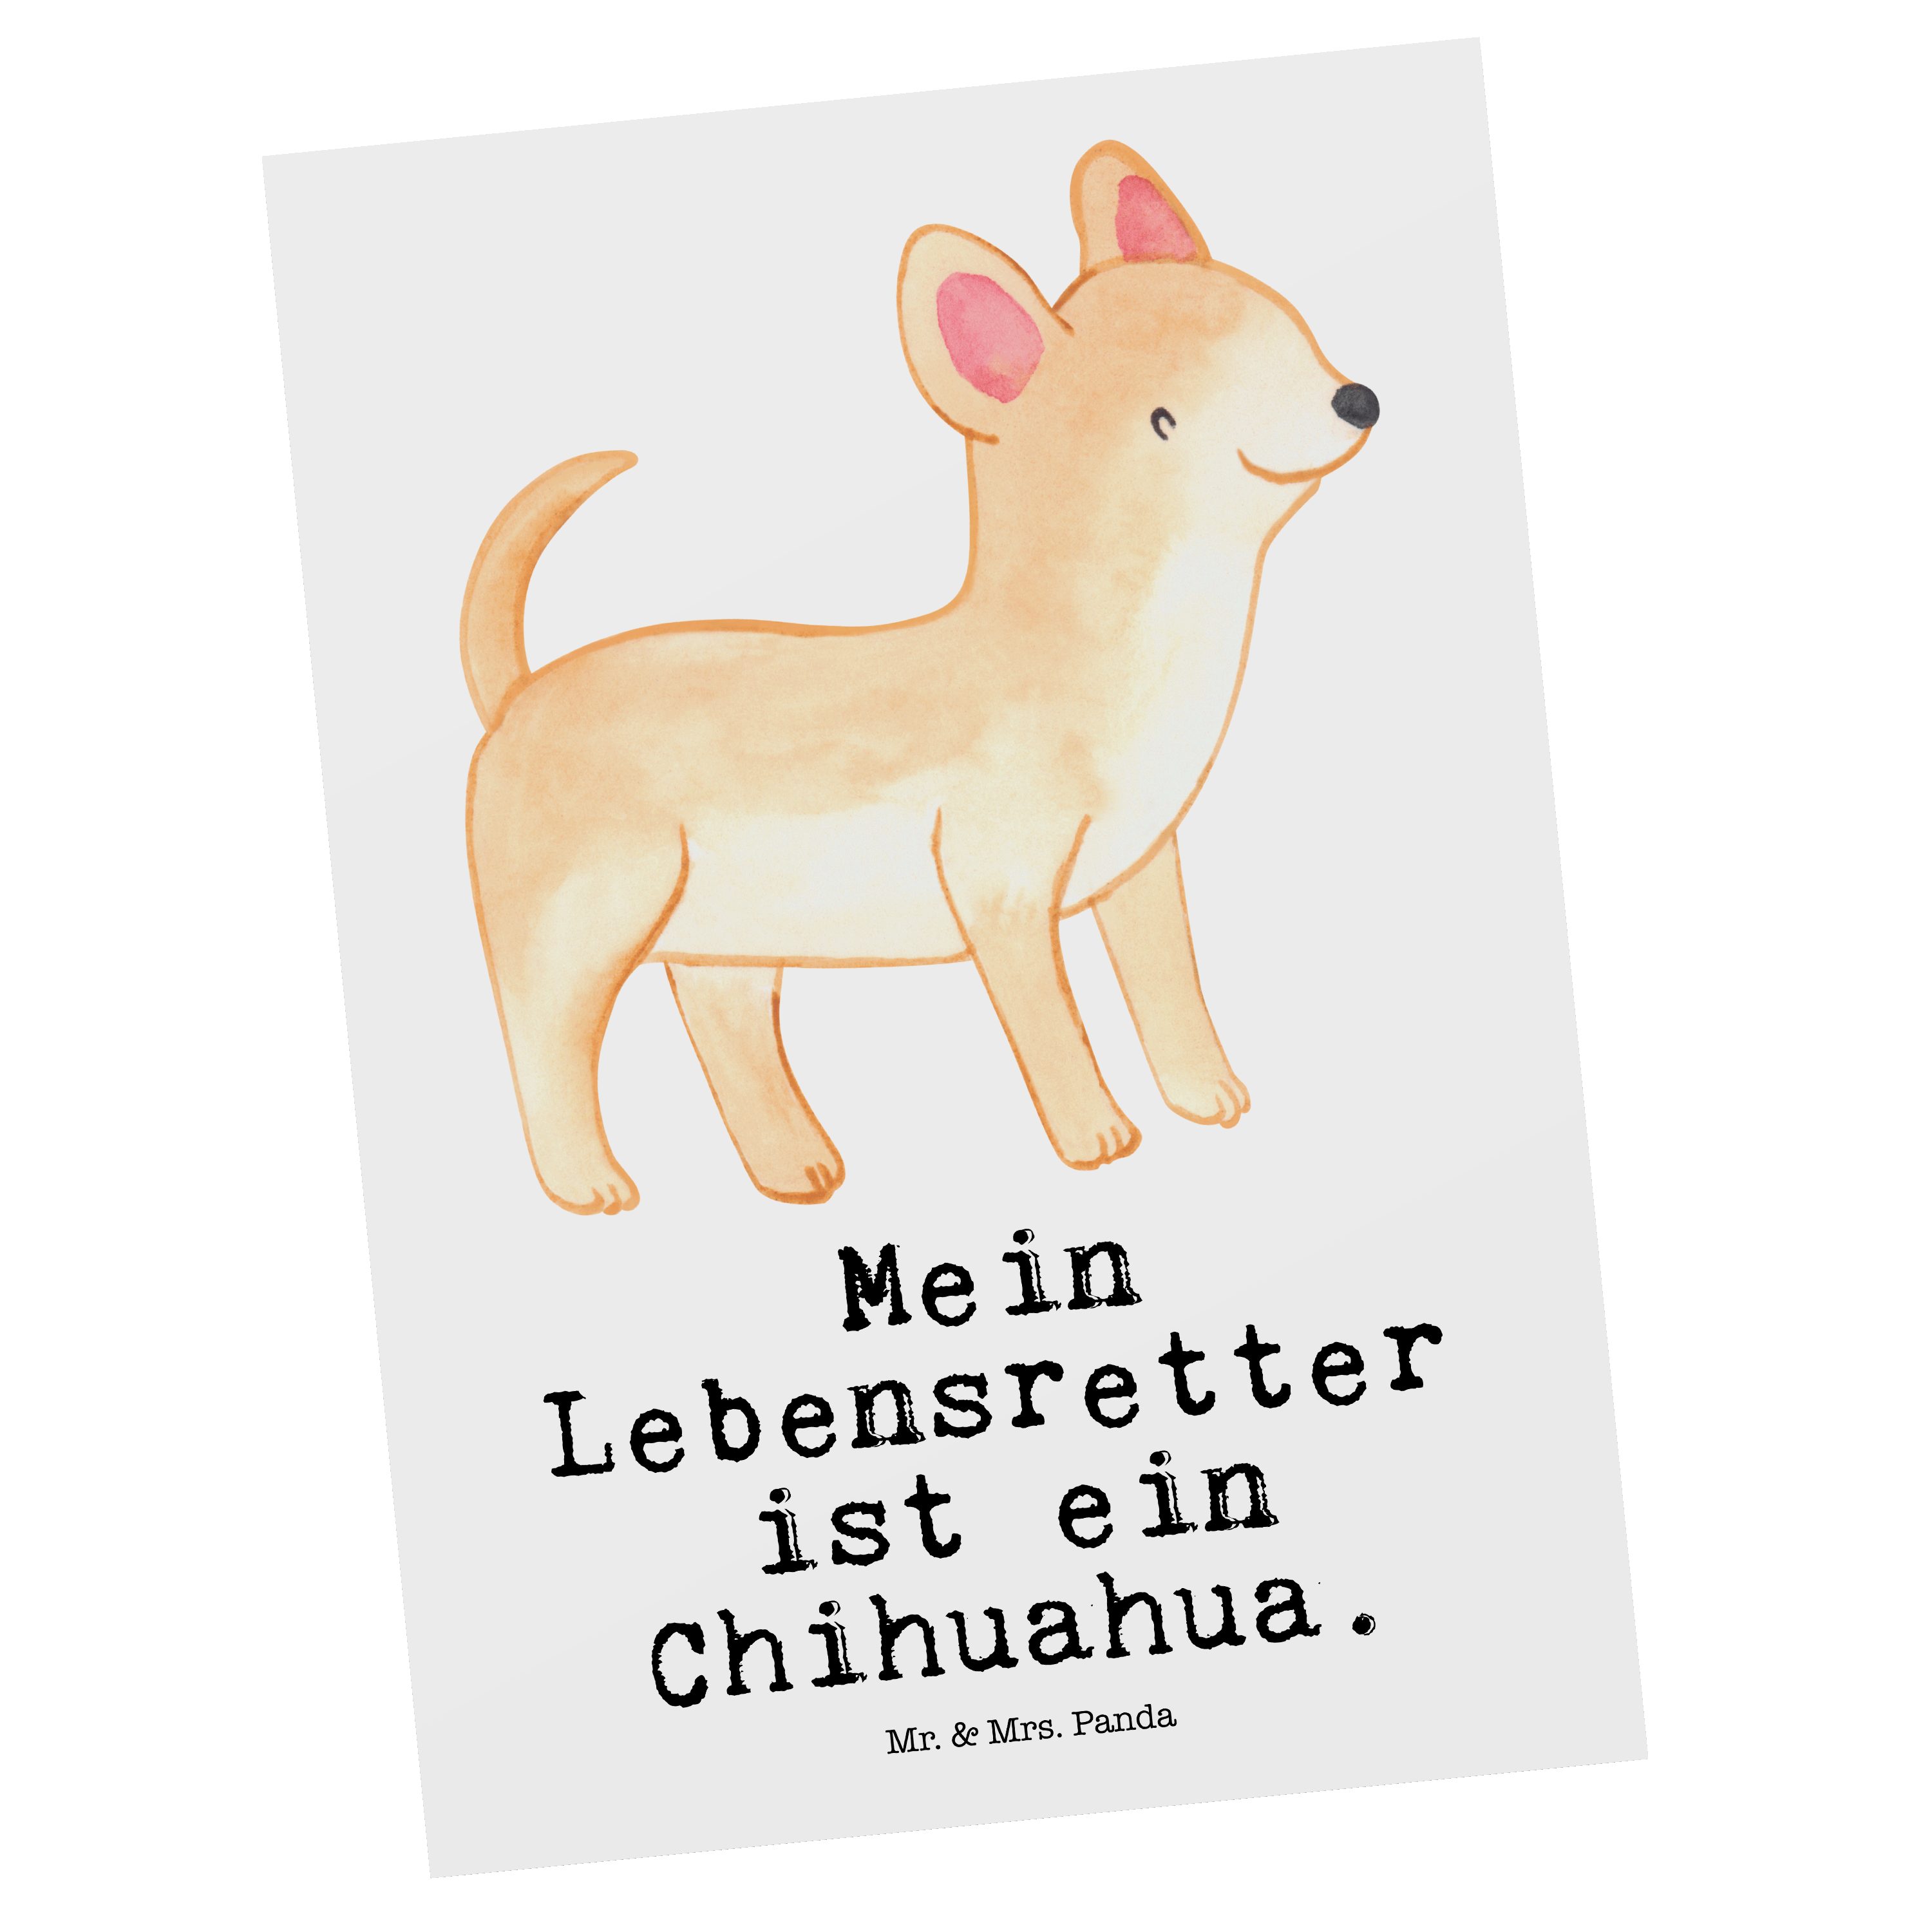 Mr. & Mrs. Panda Postkarte Chihuahua Lebensretter - Weiß - Geschenk, Karte, Grußkarte, Hundebesi